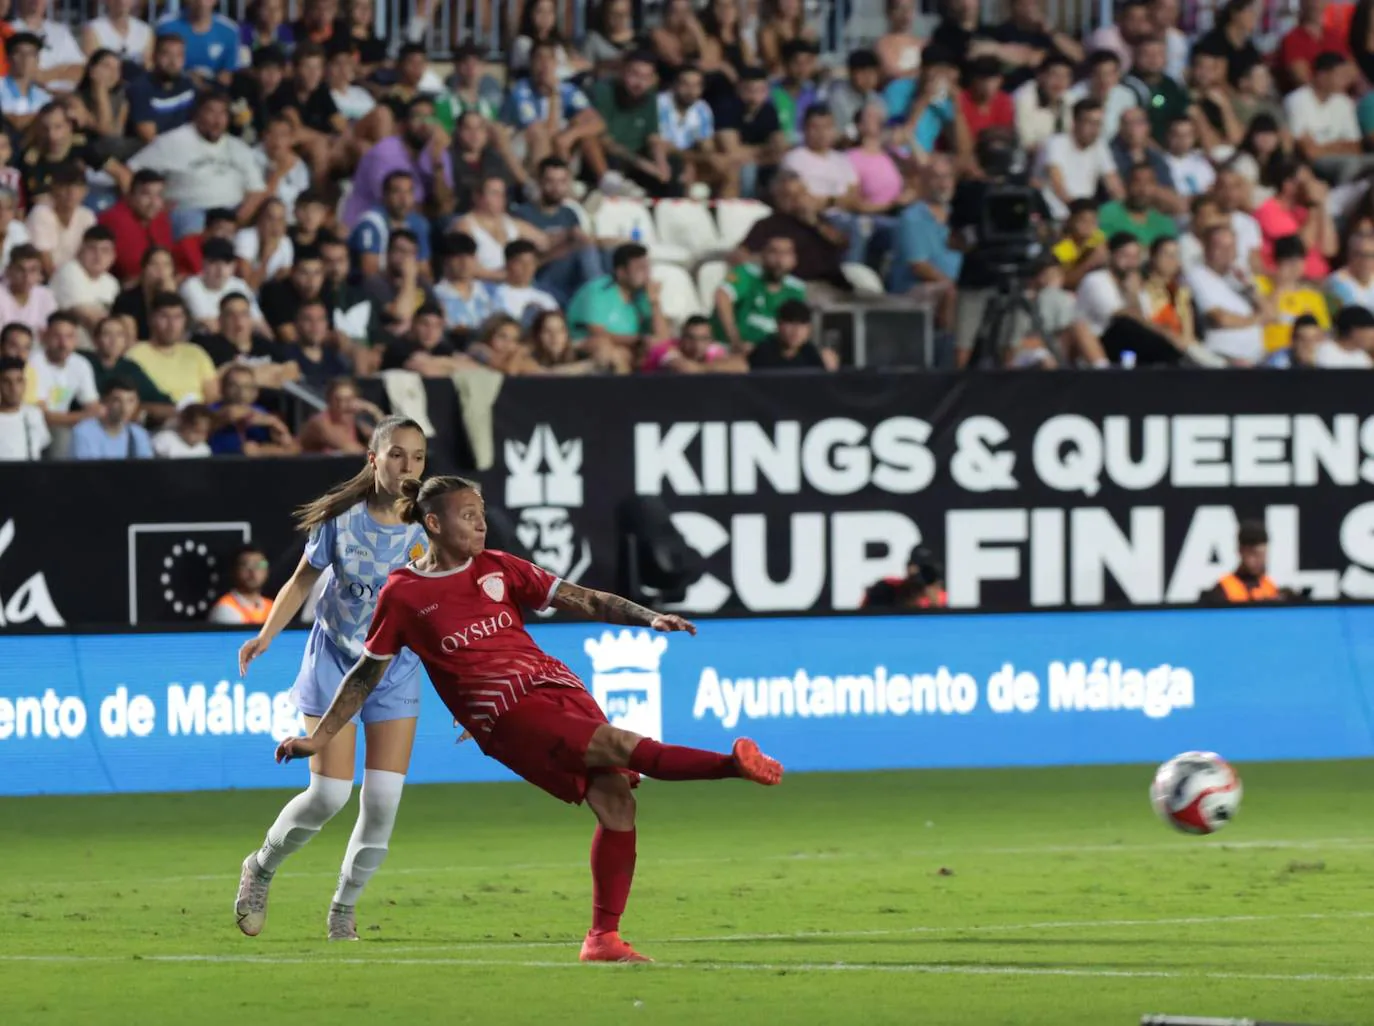 👑 Kings Cup & Queens Cup Oysho FINALS desde MÁLAGA ⚽ #Kings&QueensCup 